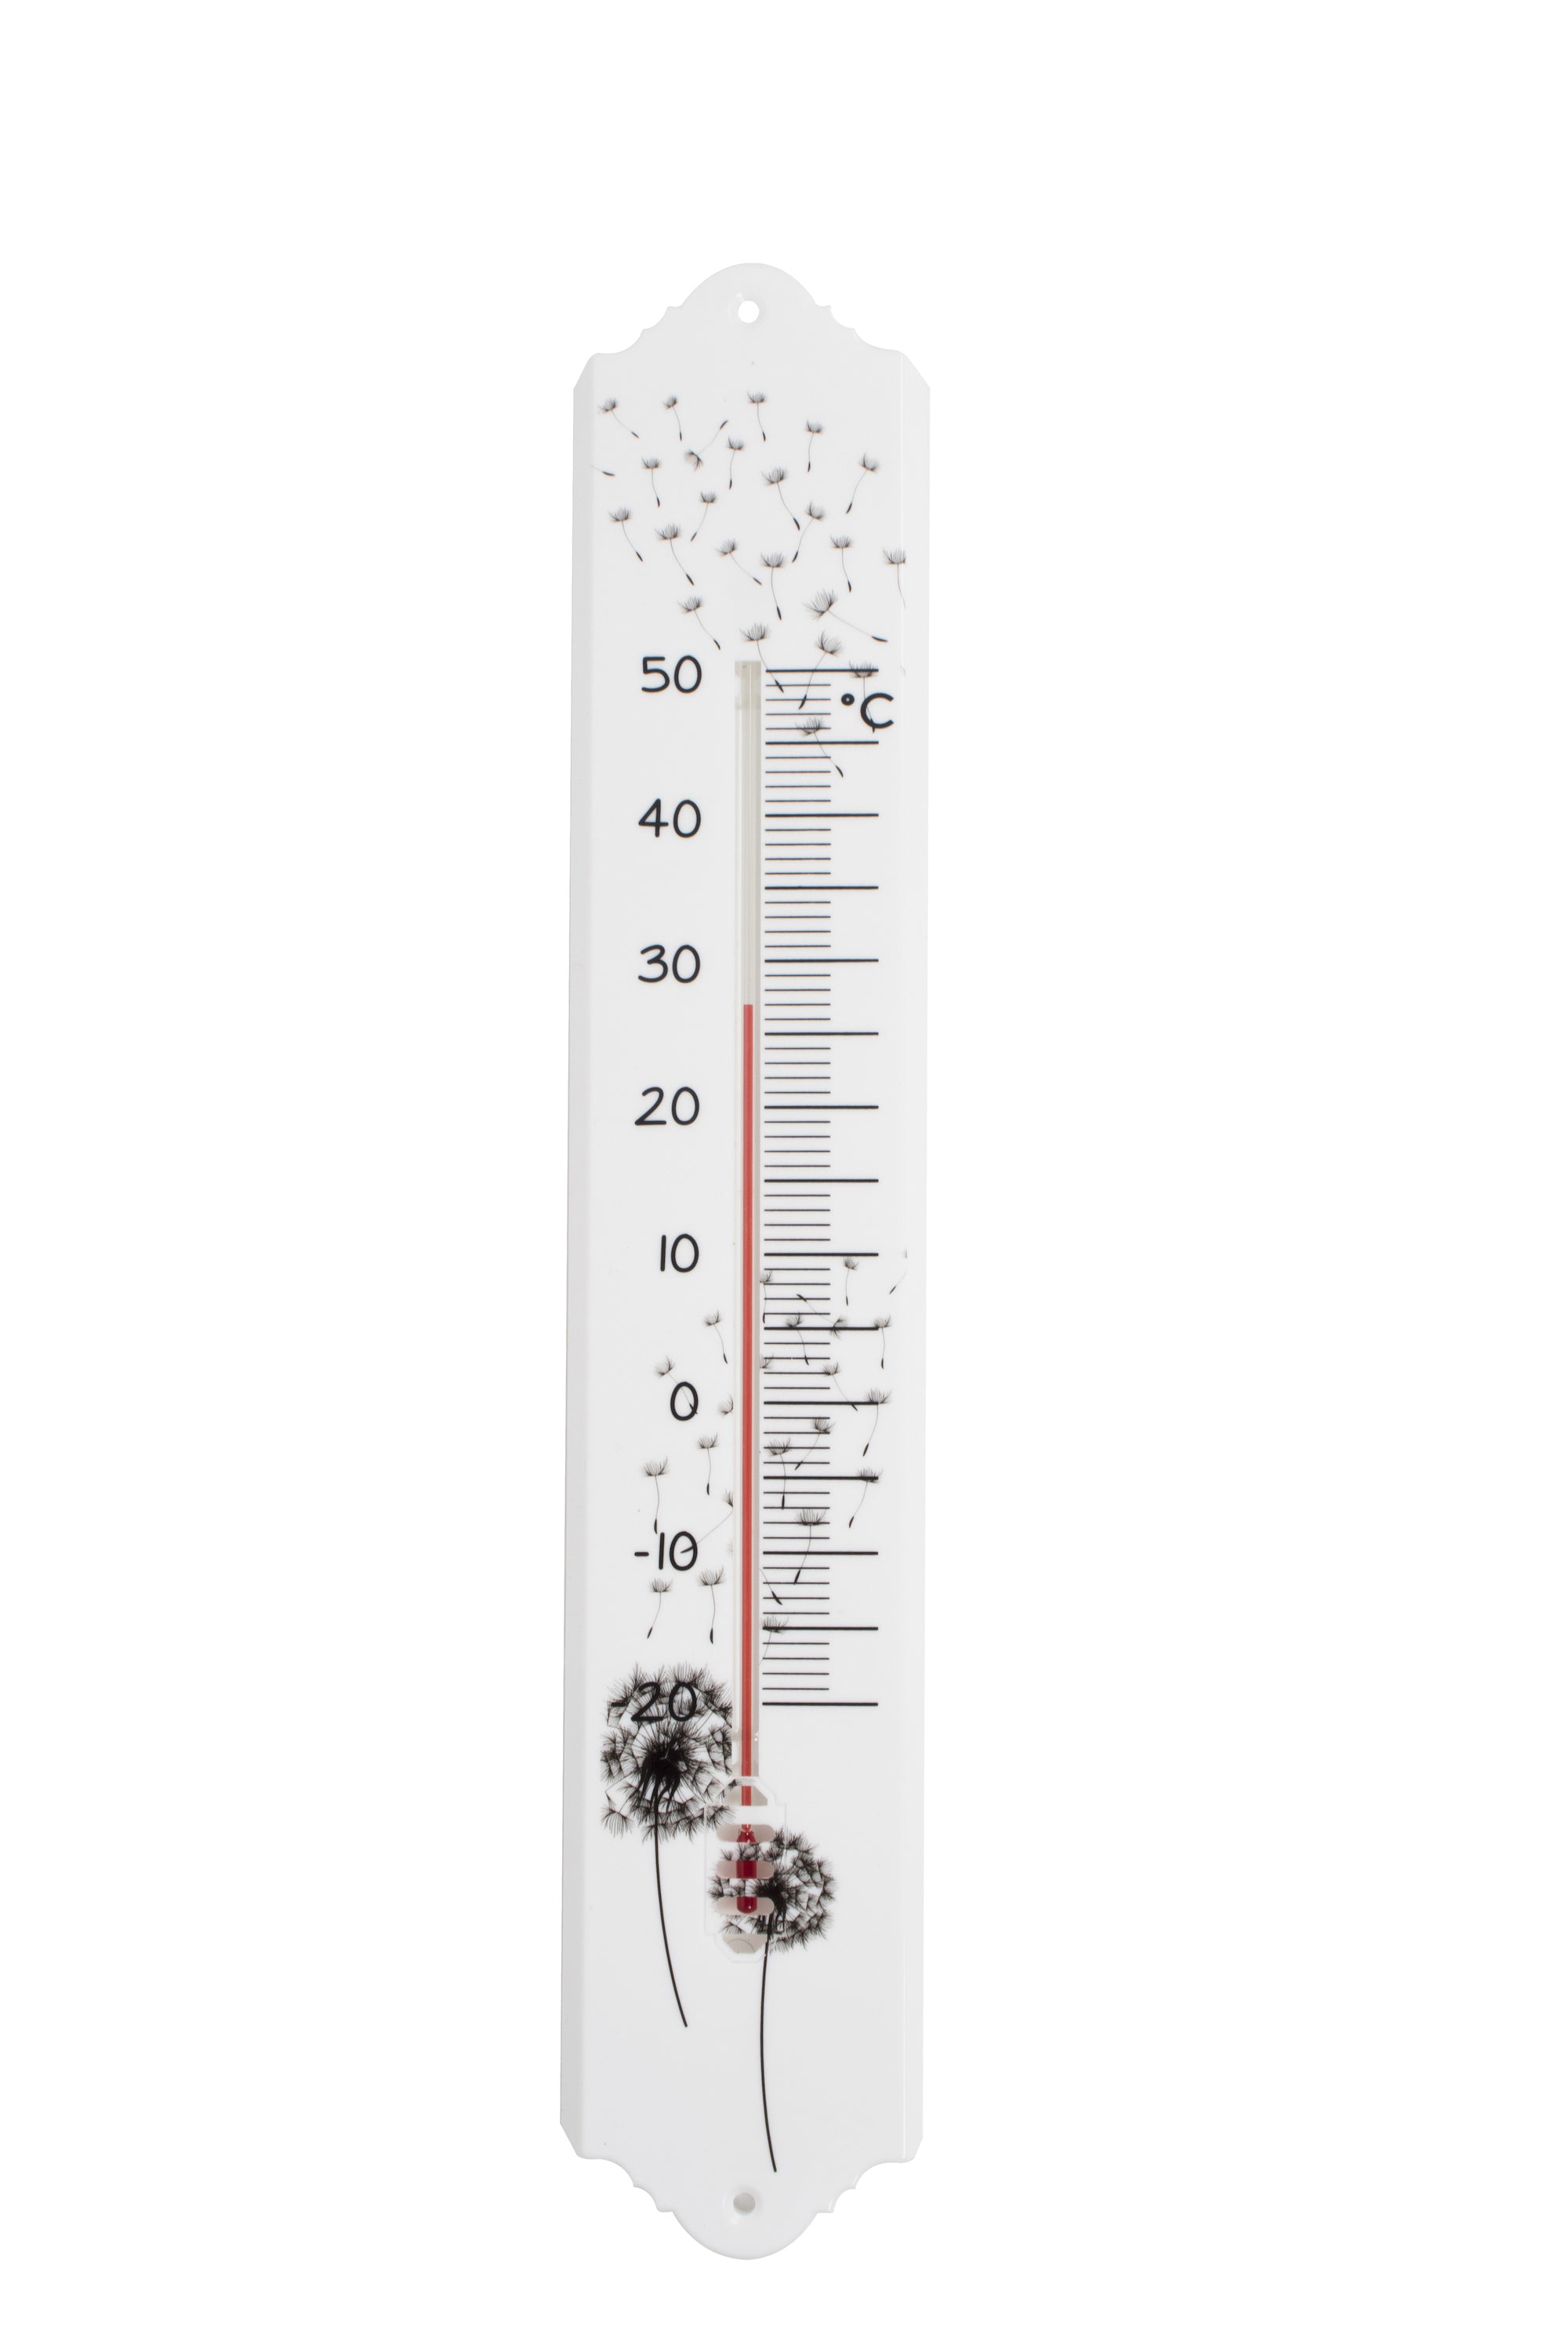 Thermomètre de jardin décoré 50 cm – ecovi